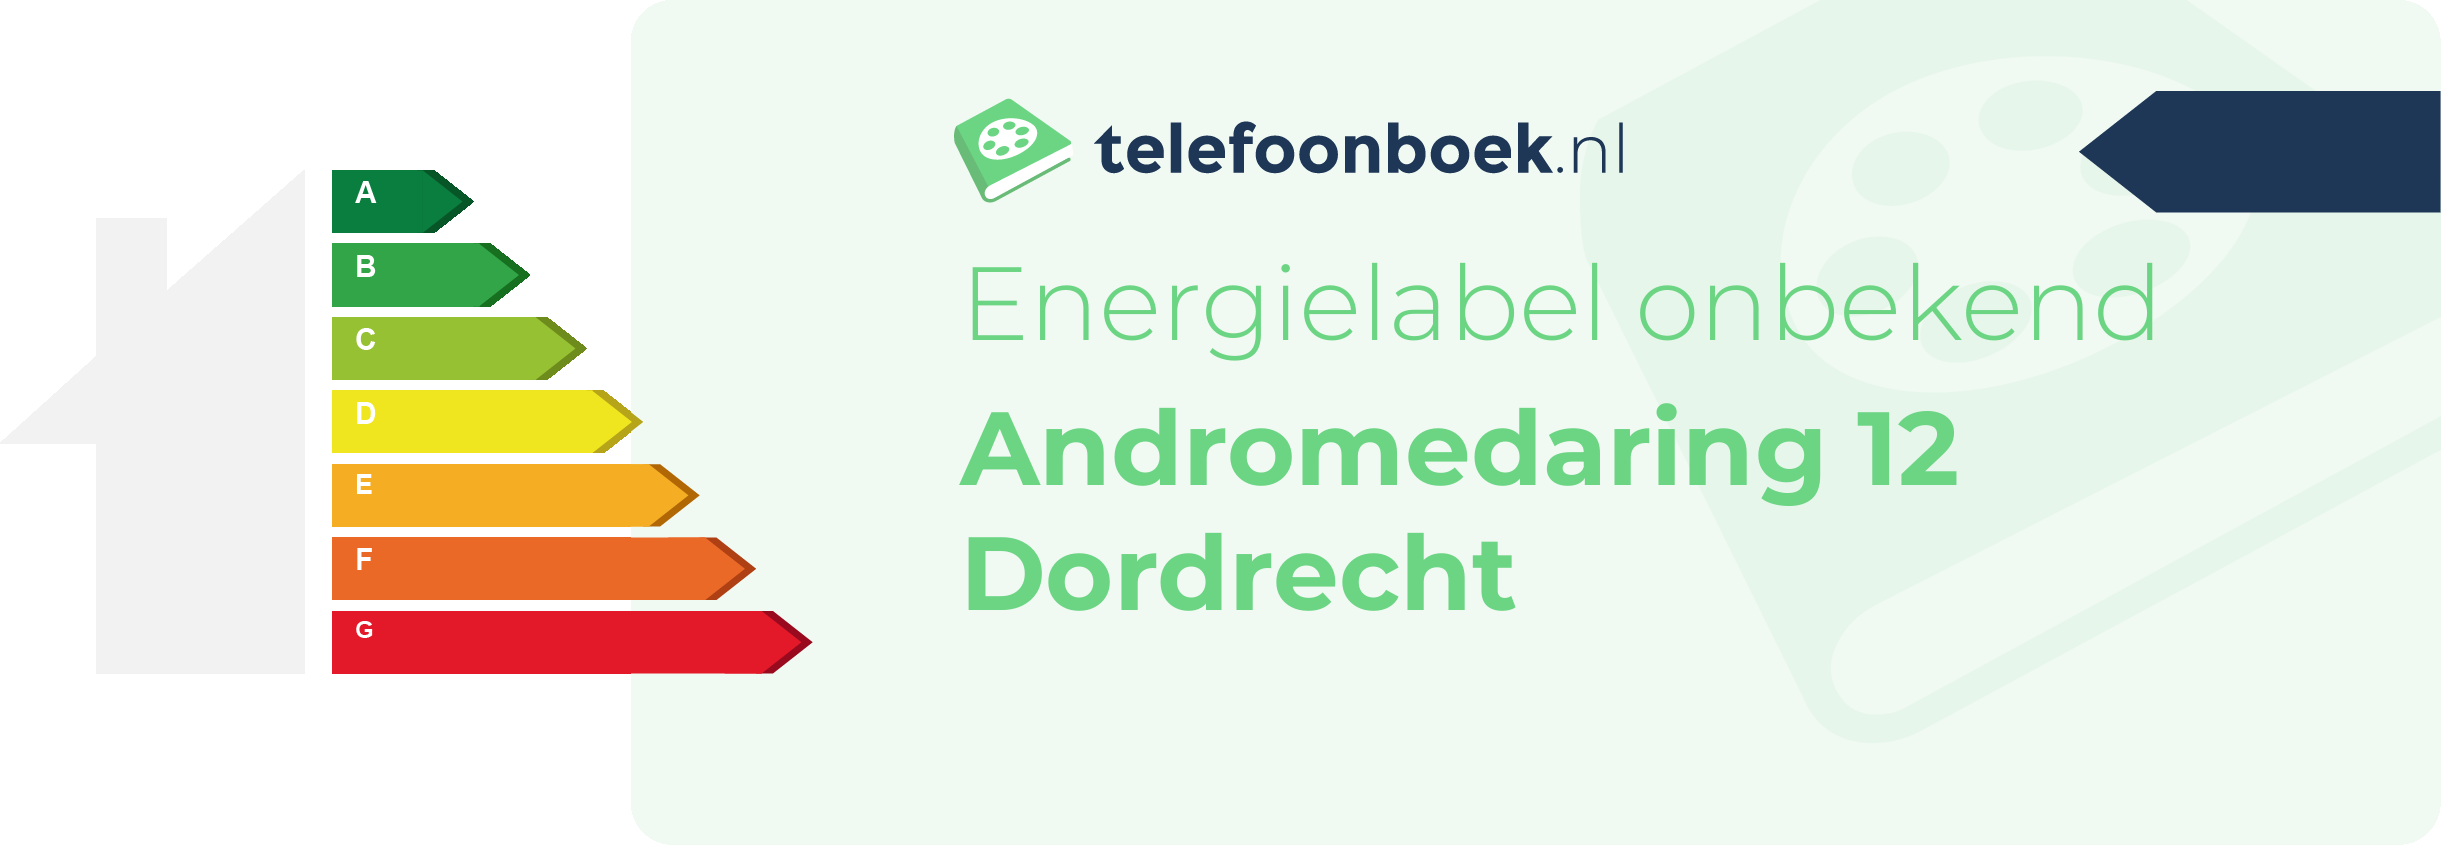 Energielabel Andromedaring 12 Dordrecht